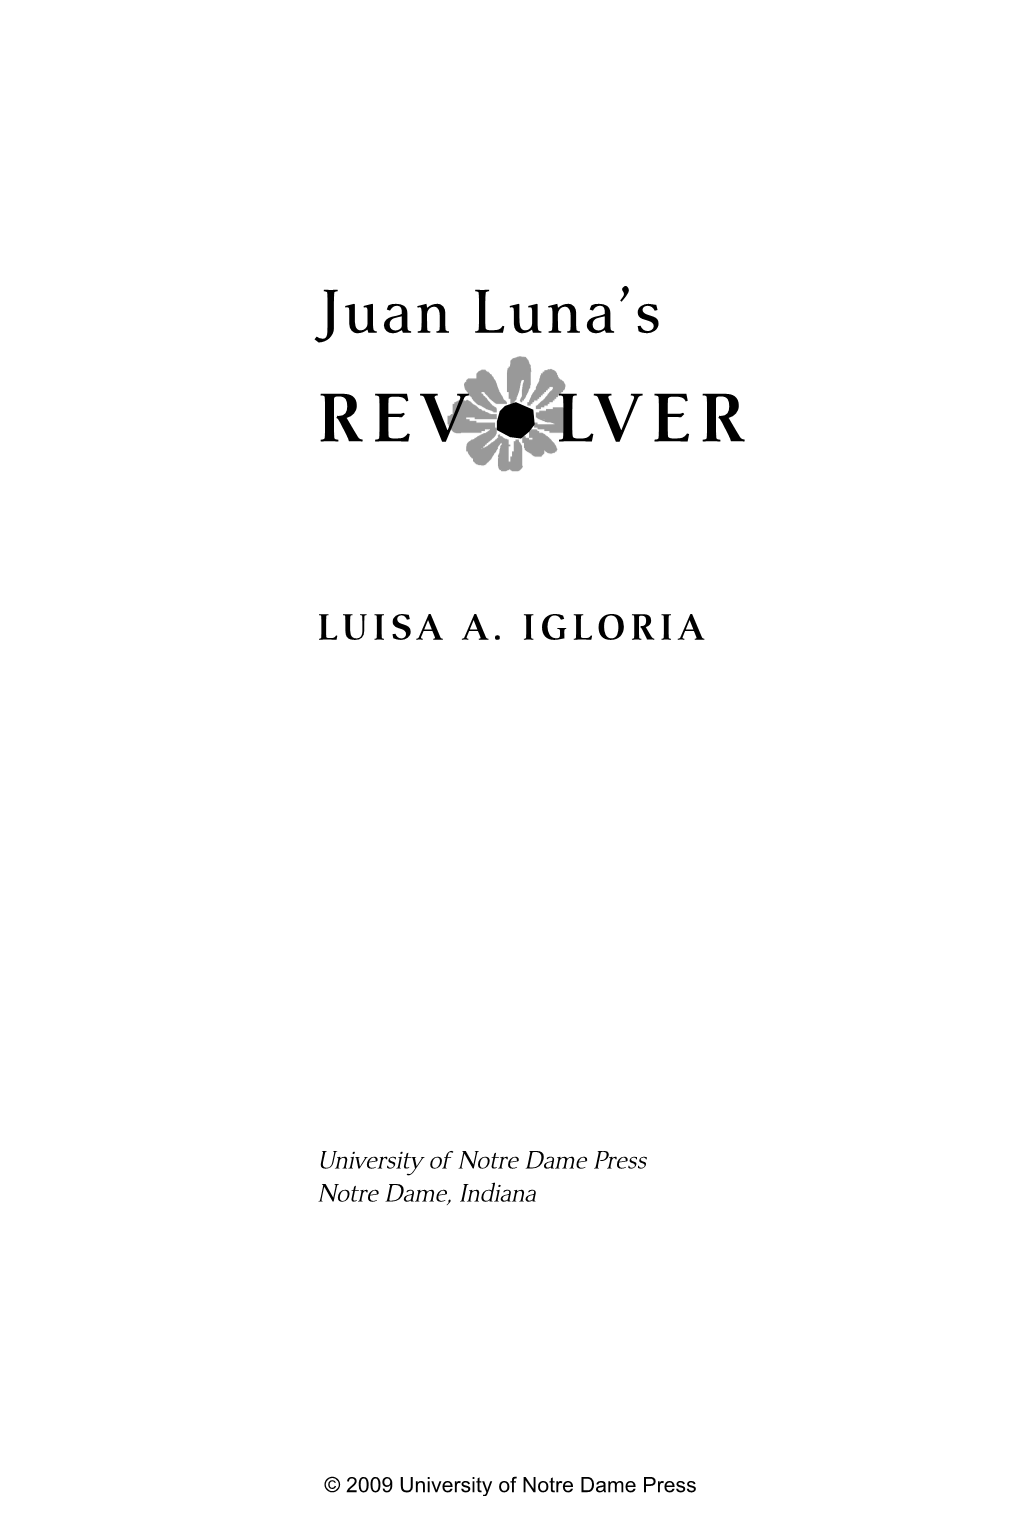 Juan Luna's Revolver / Luisa A